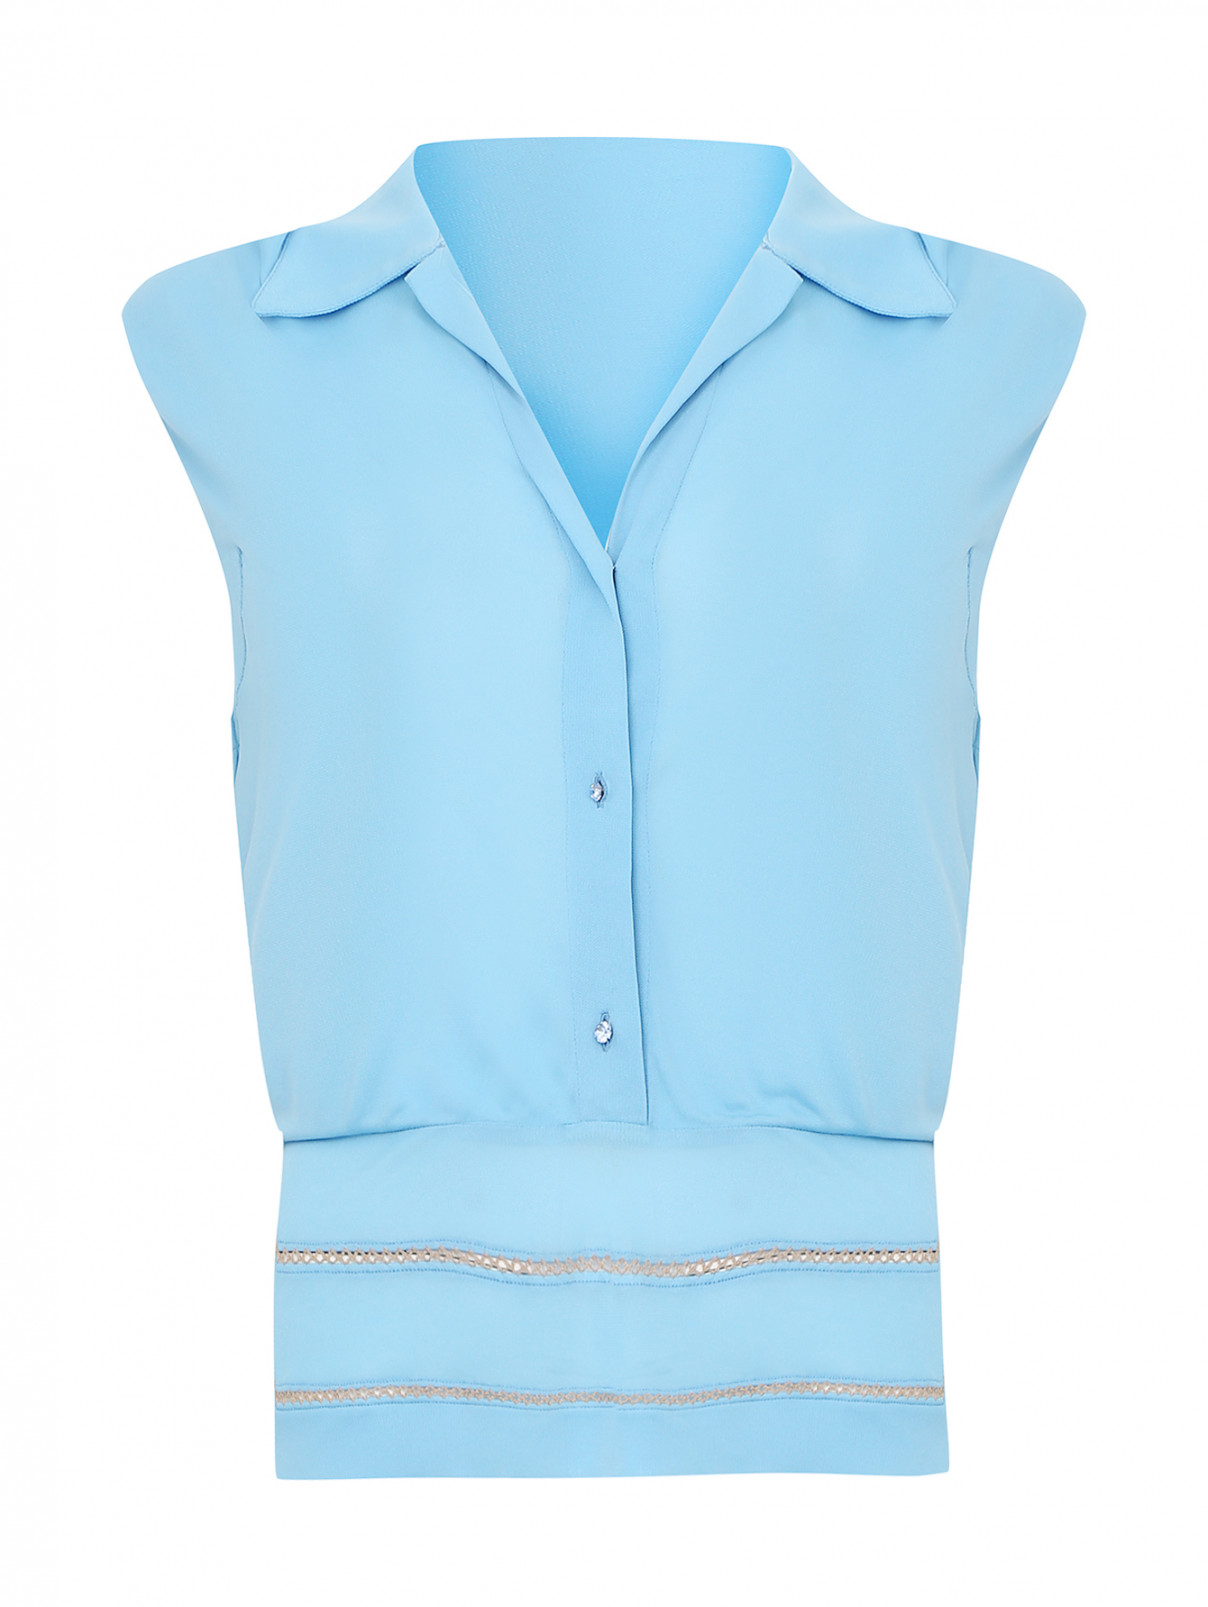 Блуза с короткими рукавами La Perla  –  Общий вид  – Цвет:  Синий